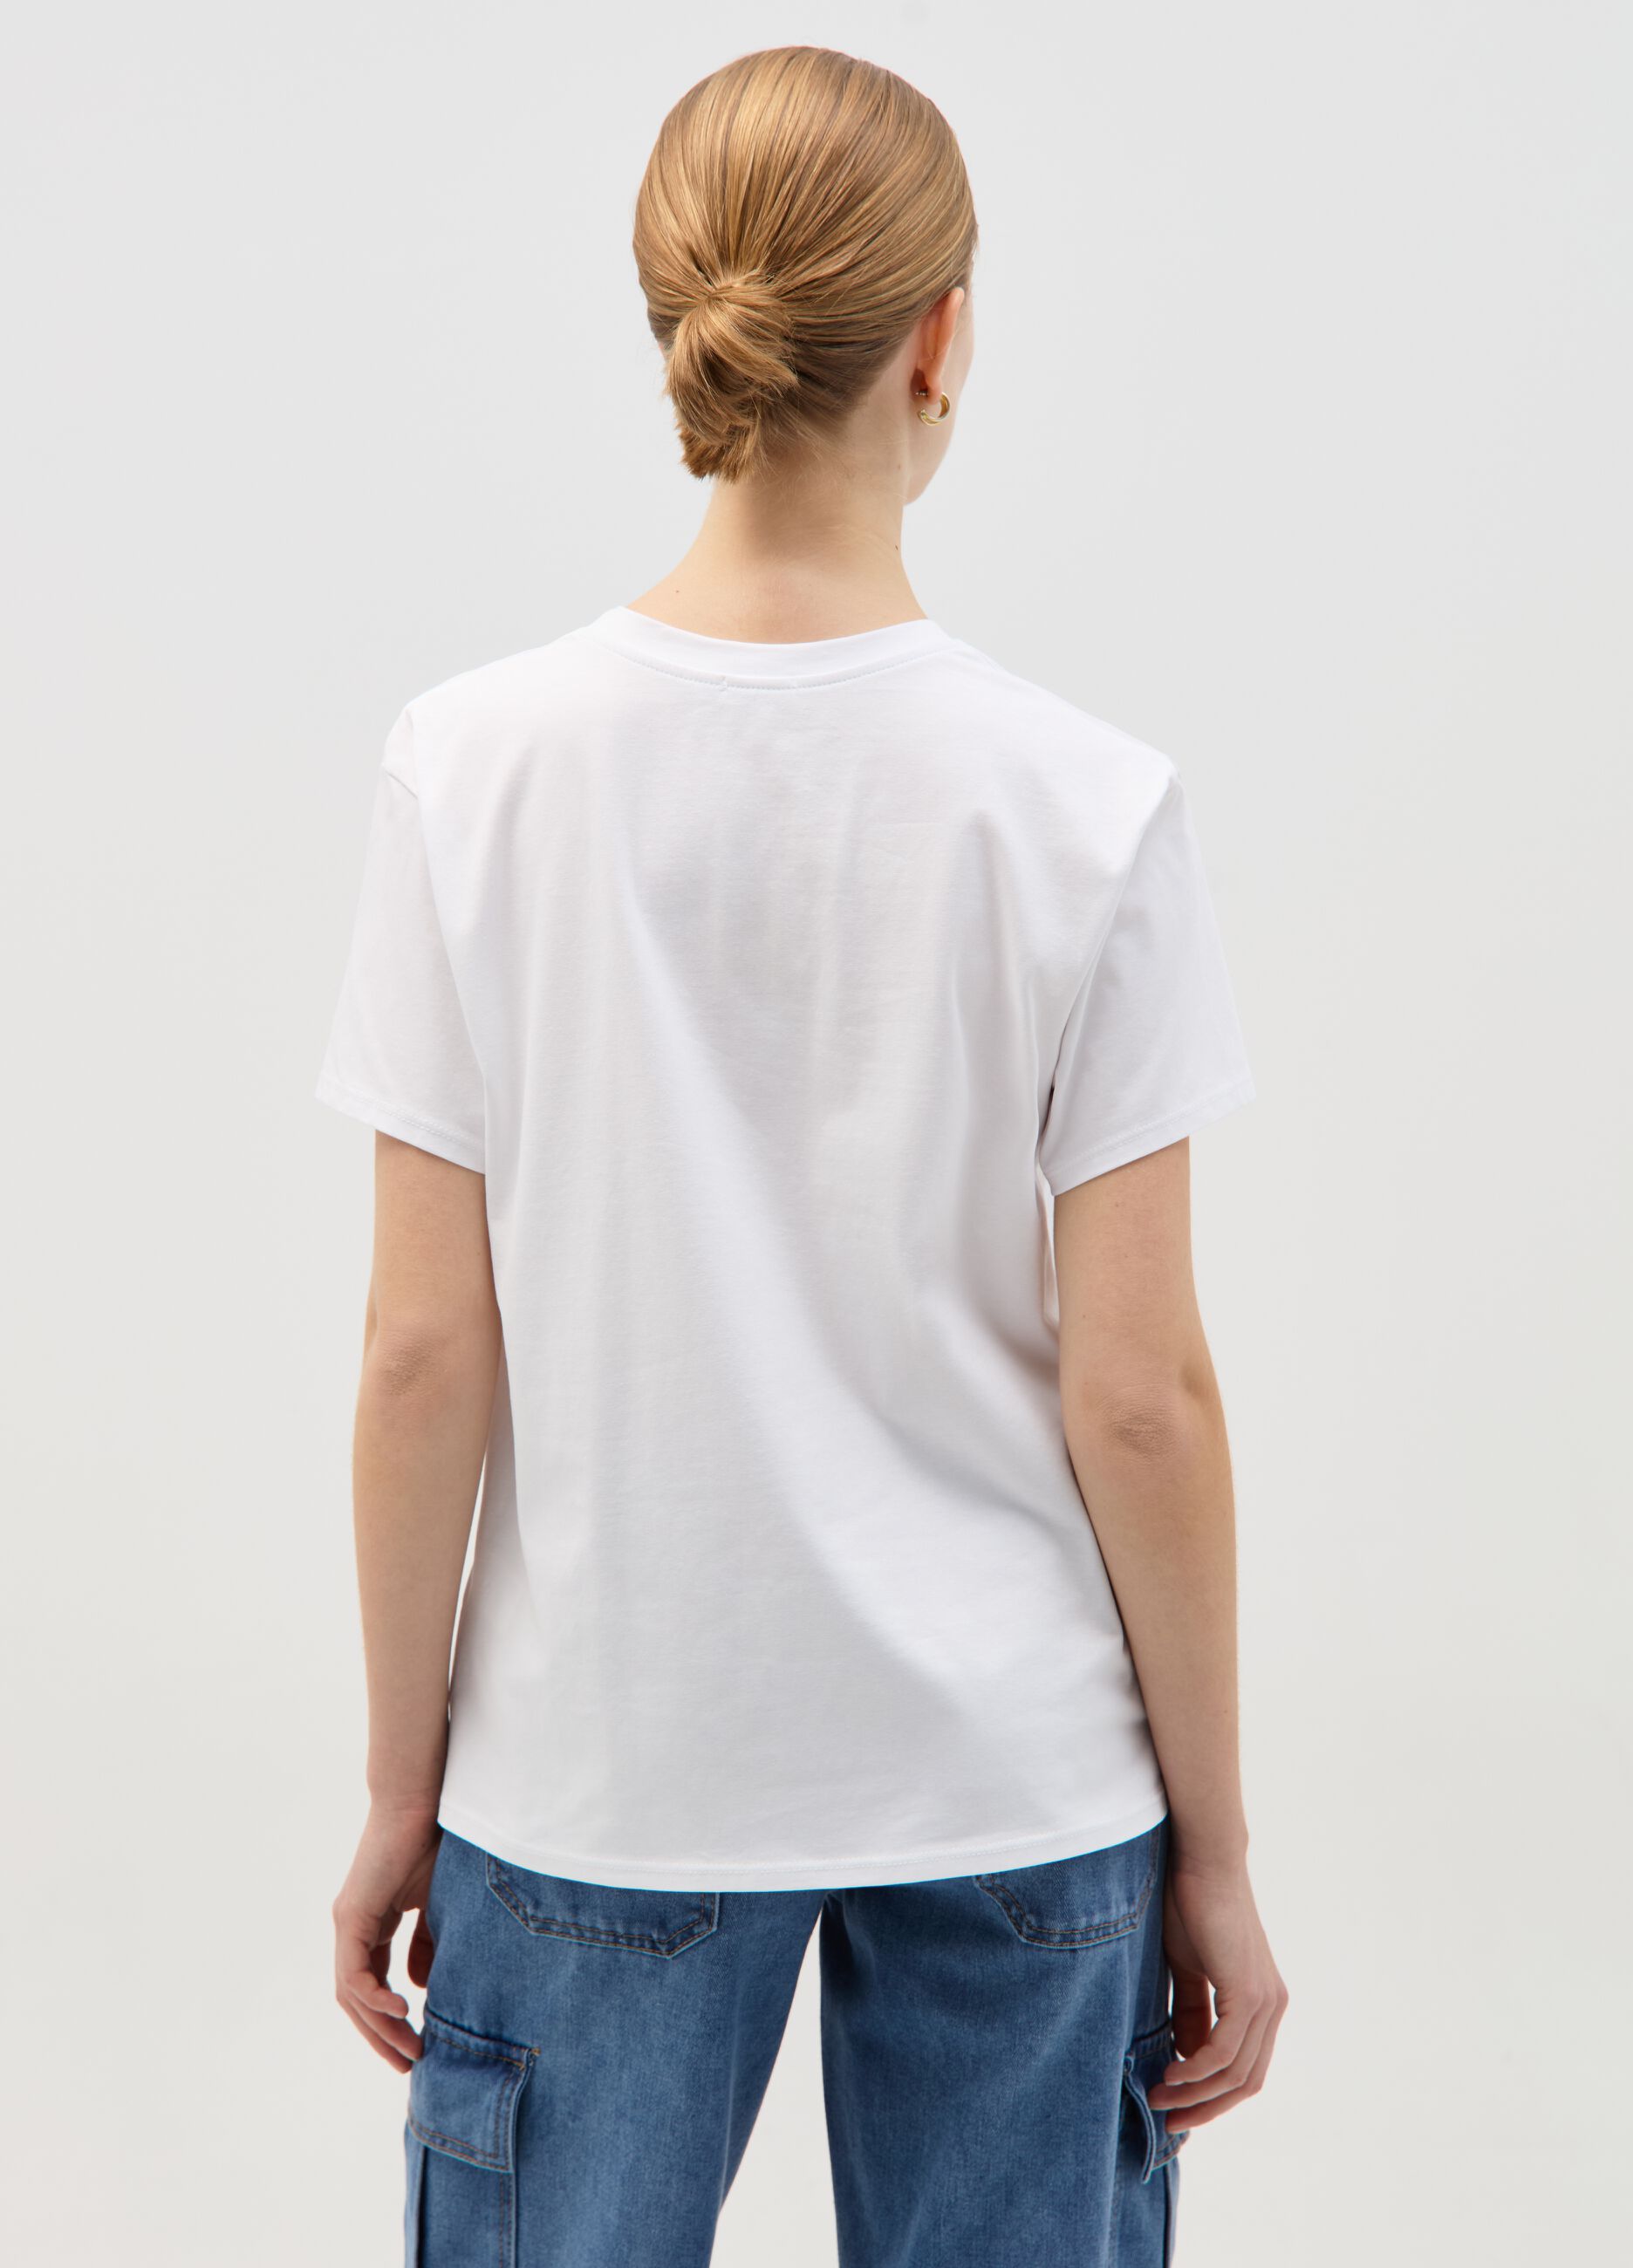 T-shirt with La Dolce Vita print in foil